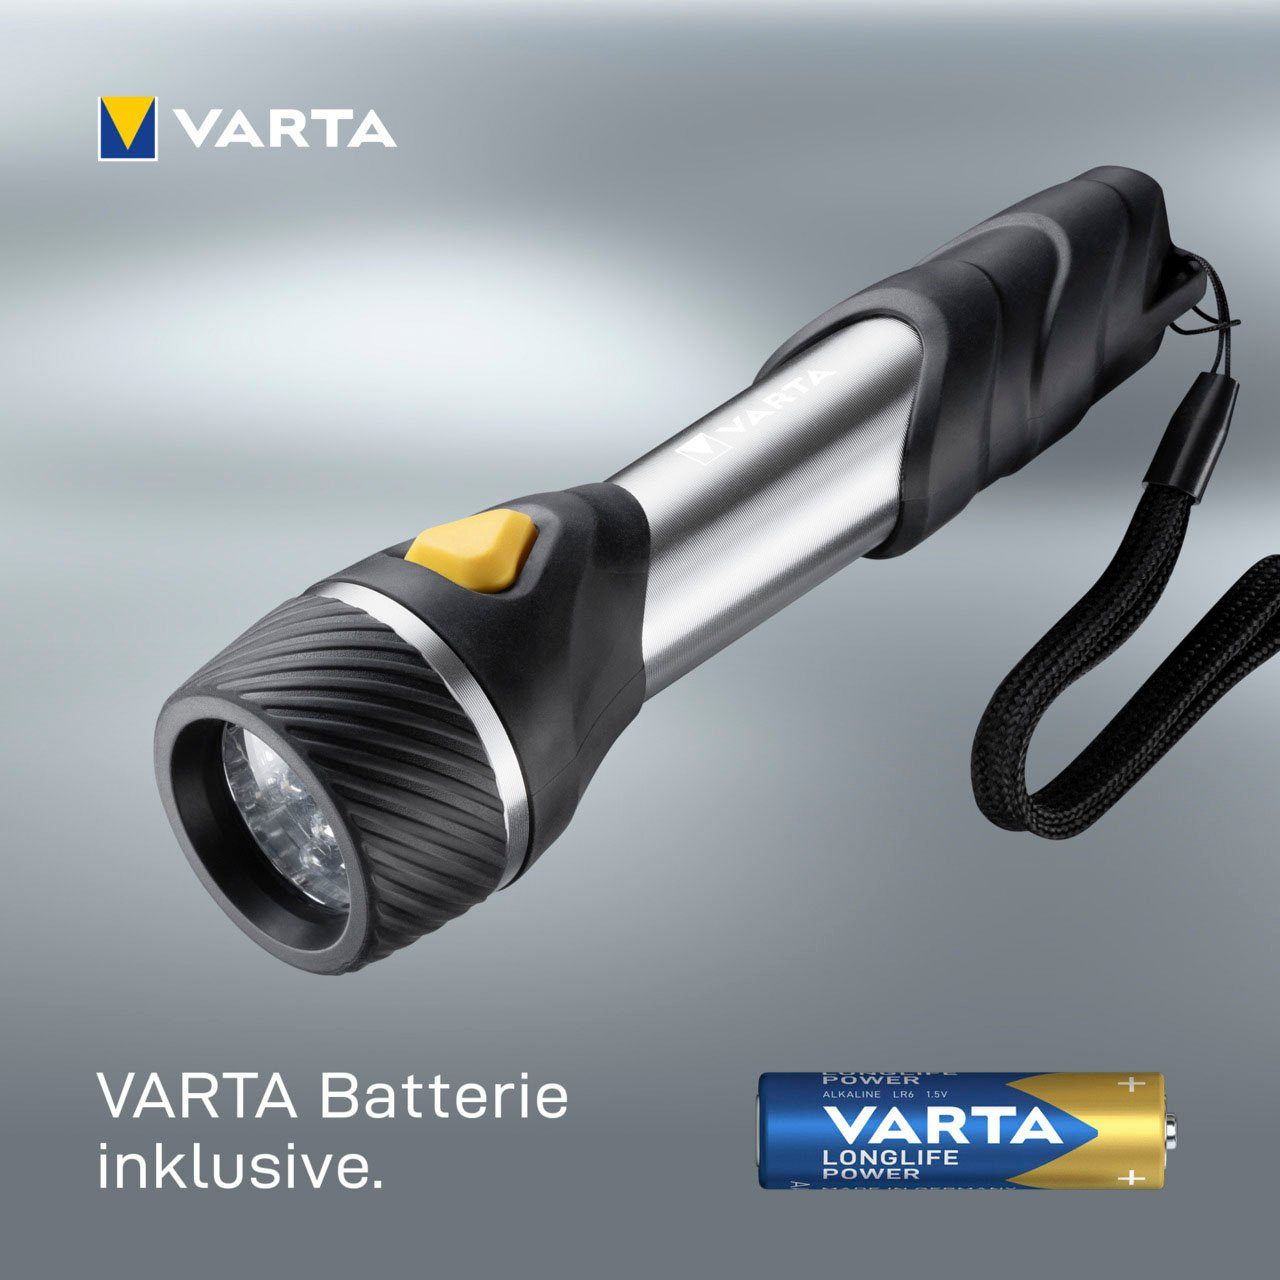 VARTA Taschenlampe F10 LED Day Multi 5 LEDs mit Light Taschenlampe VARTA